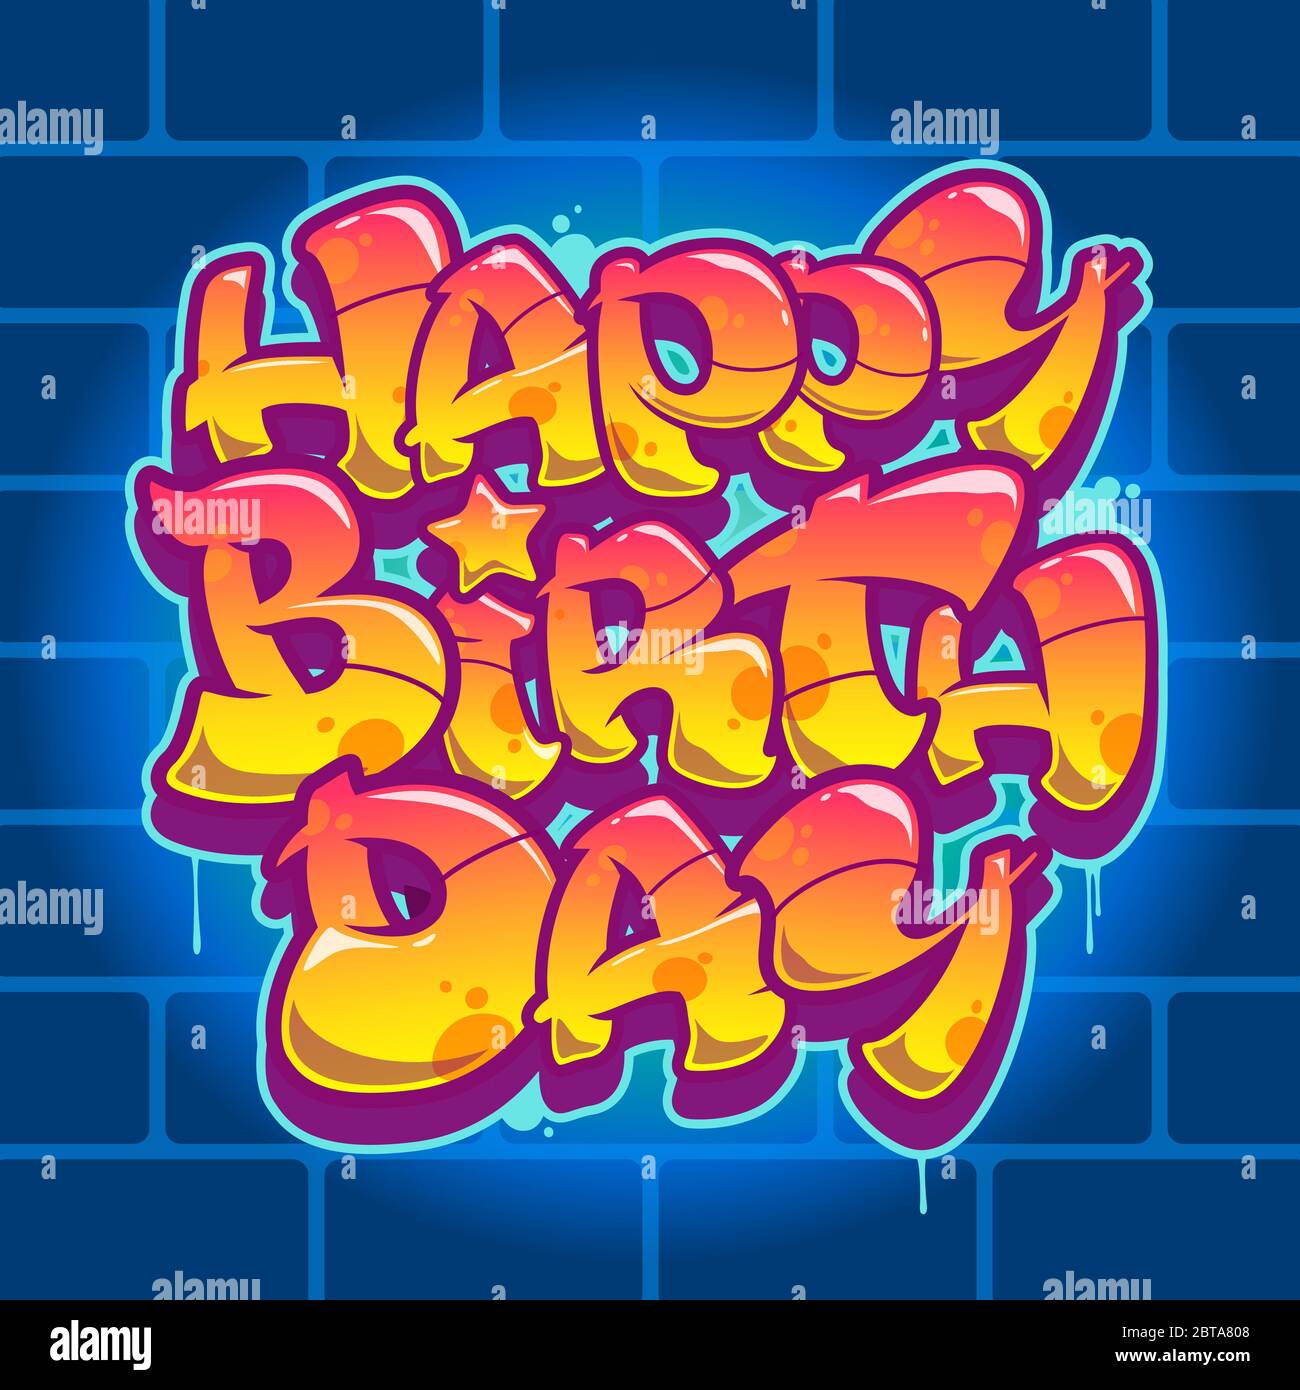 Happy birthday congratulation card. Readable graffiti style text Stock Vector